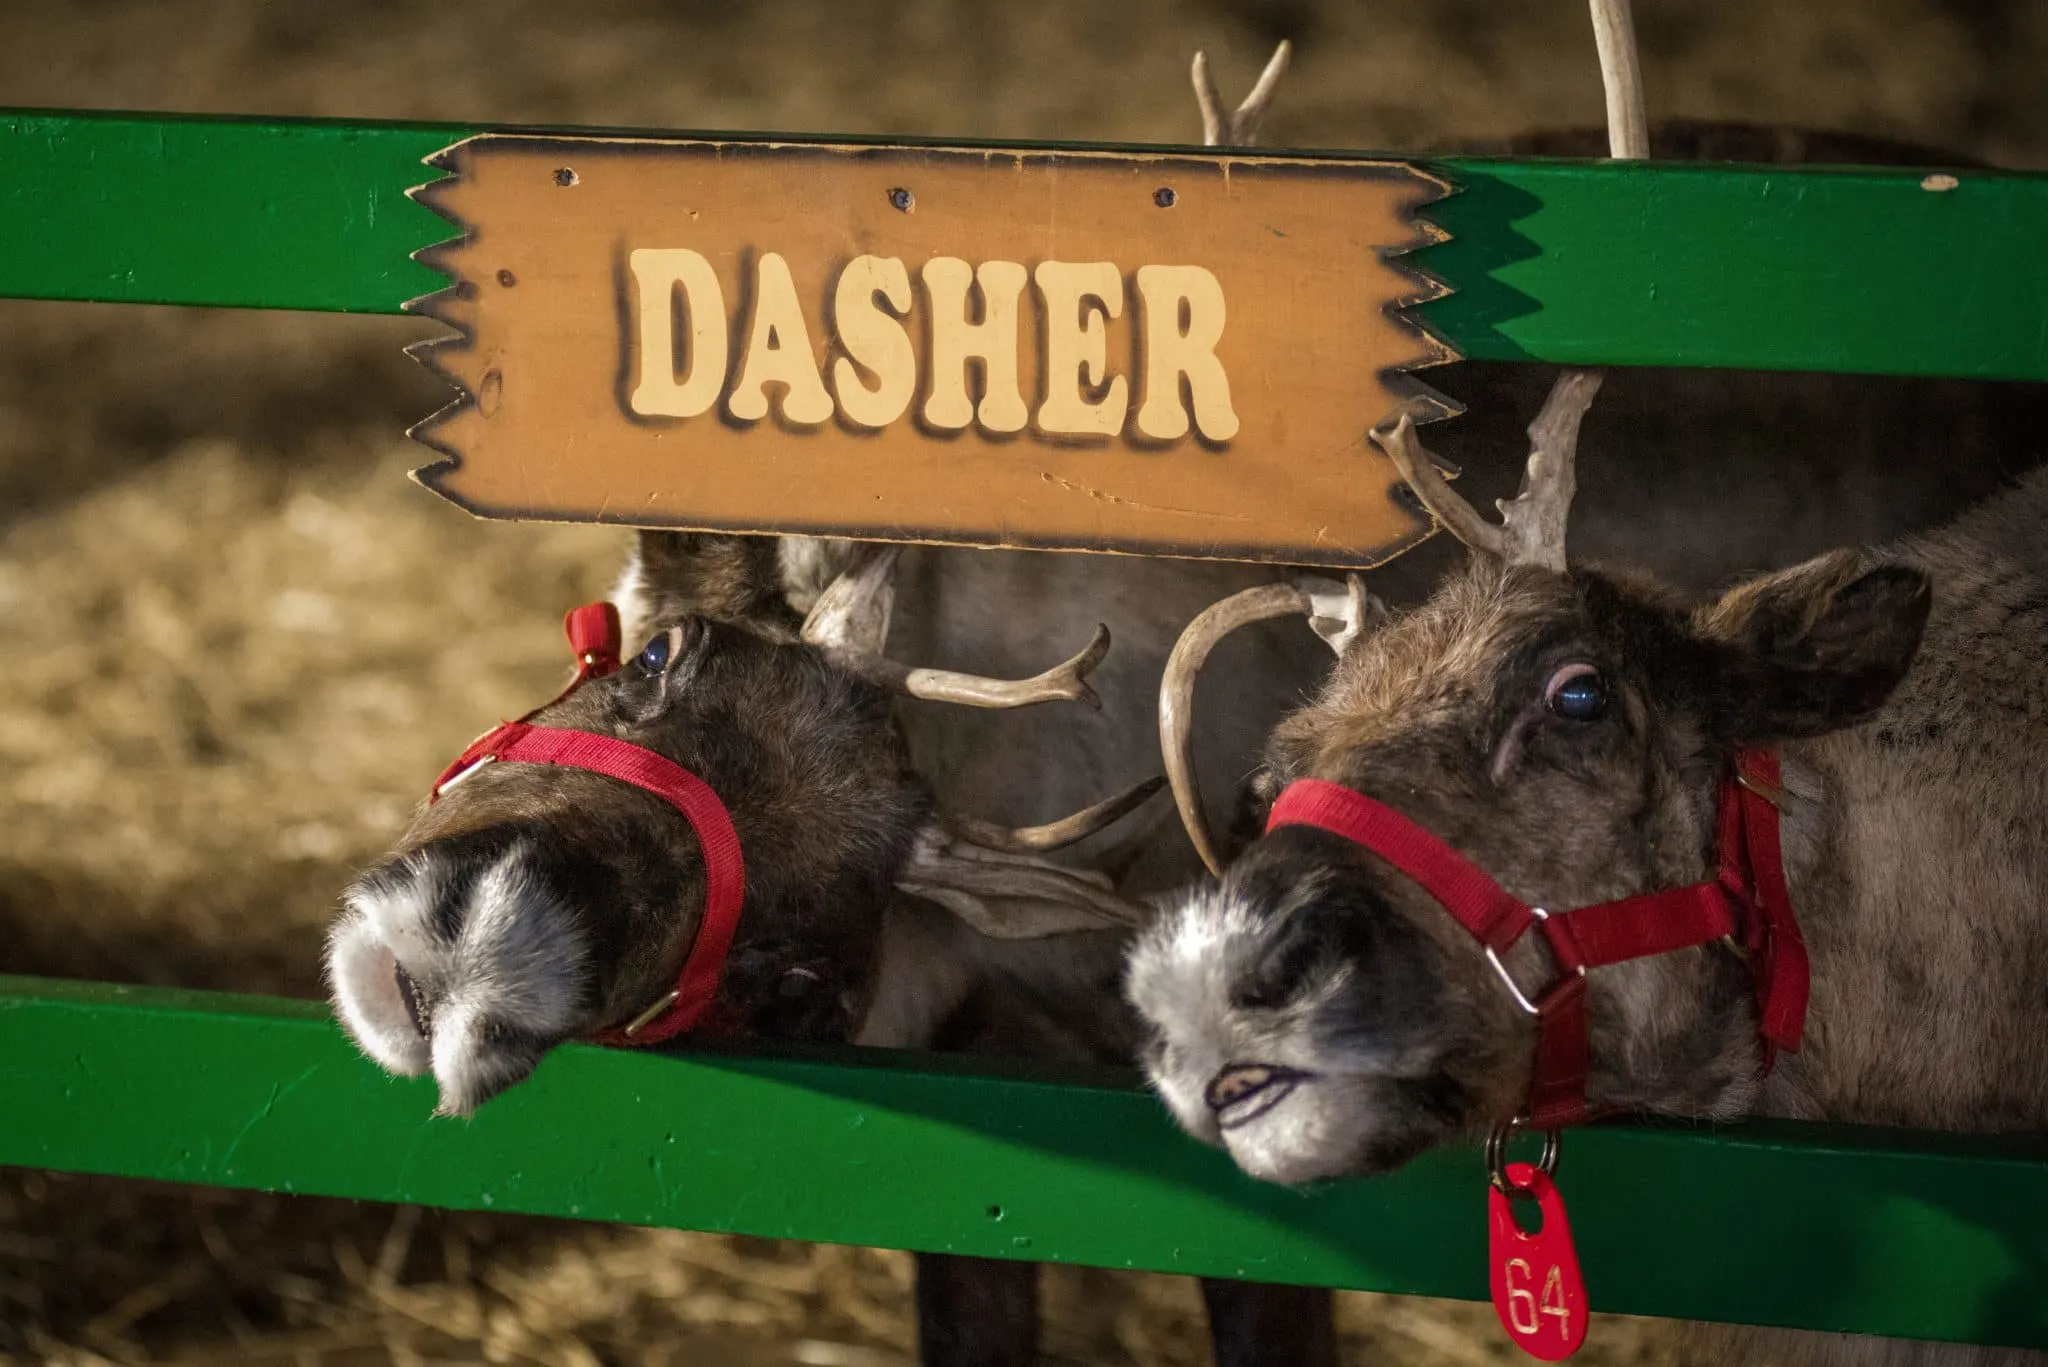 Christmas in Hershey Brings Seasonal Charm to Chocolate Town U.S.A. #HersheyPA 